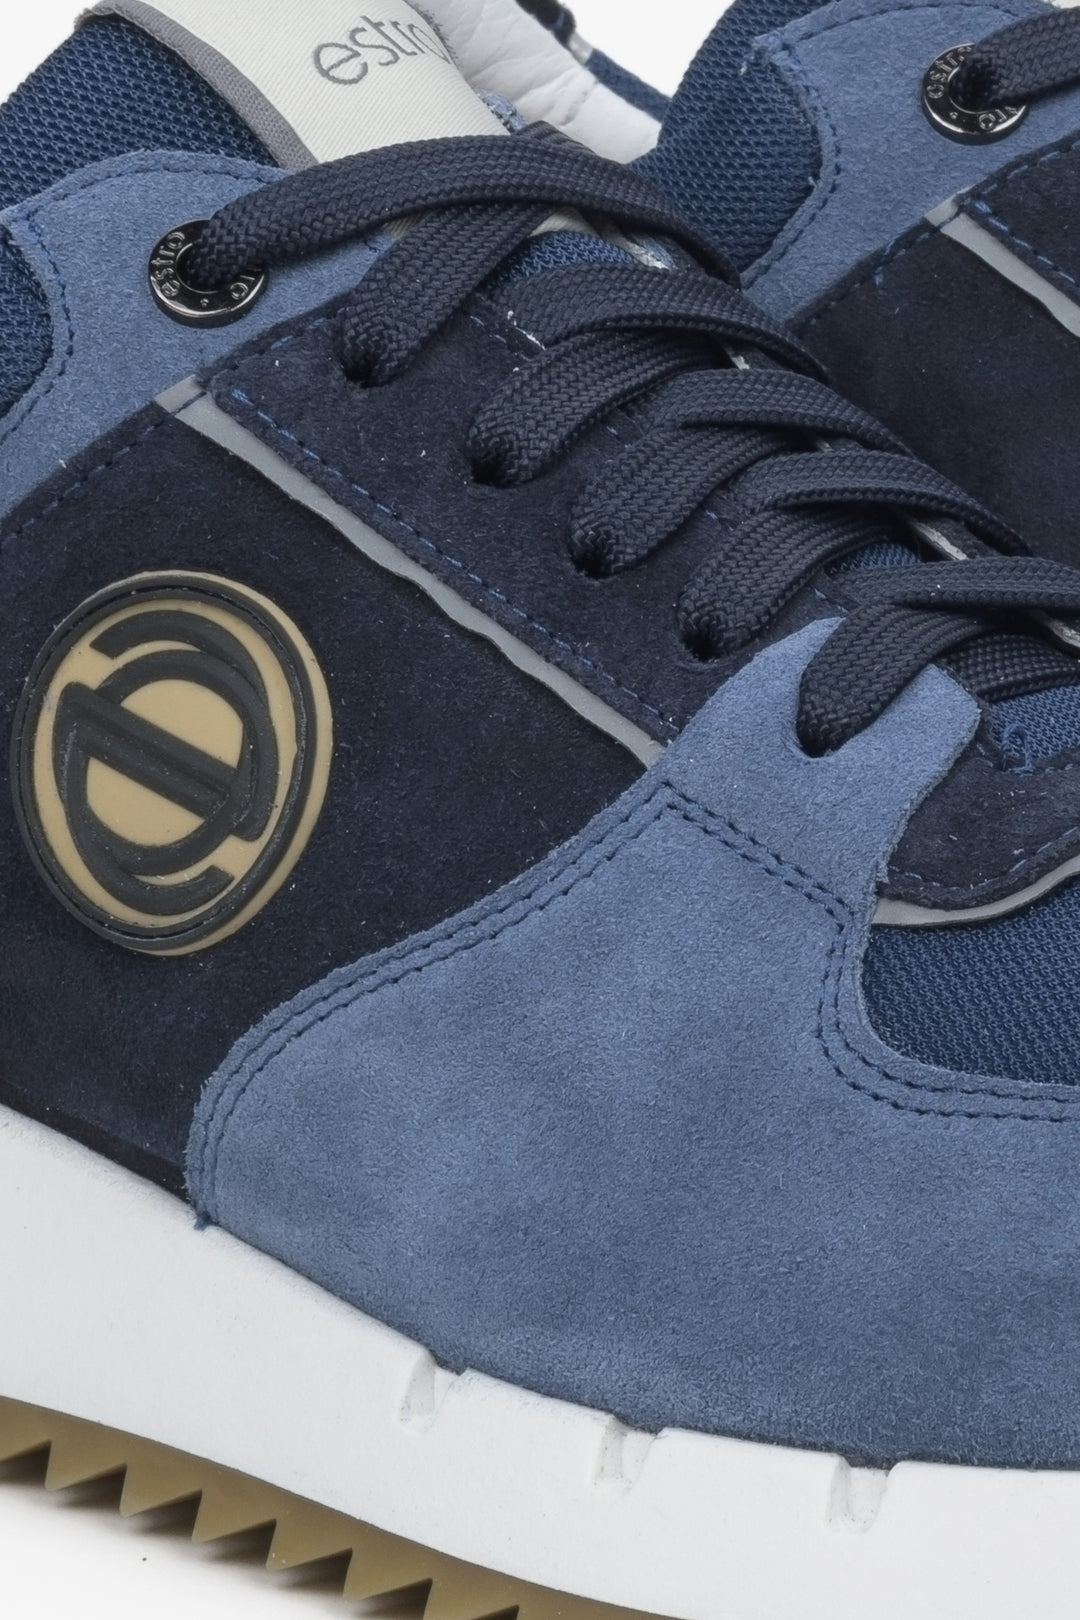 Estro men's black and blue sneakers - close-up on details.